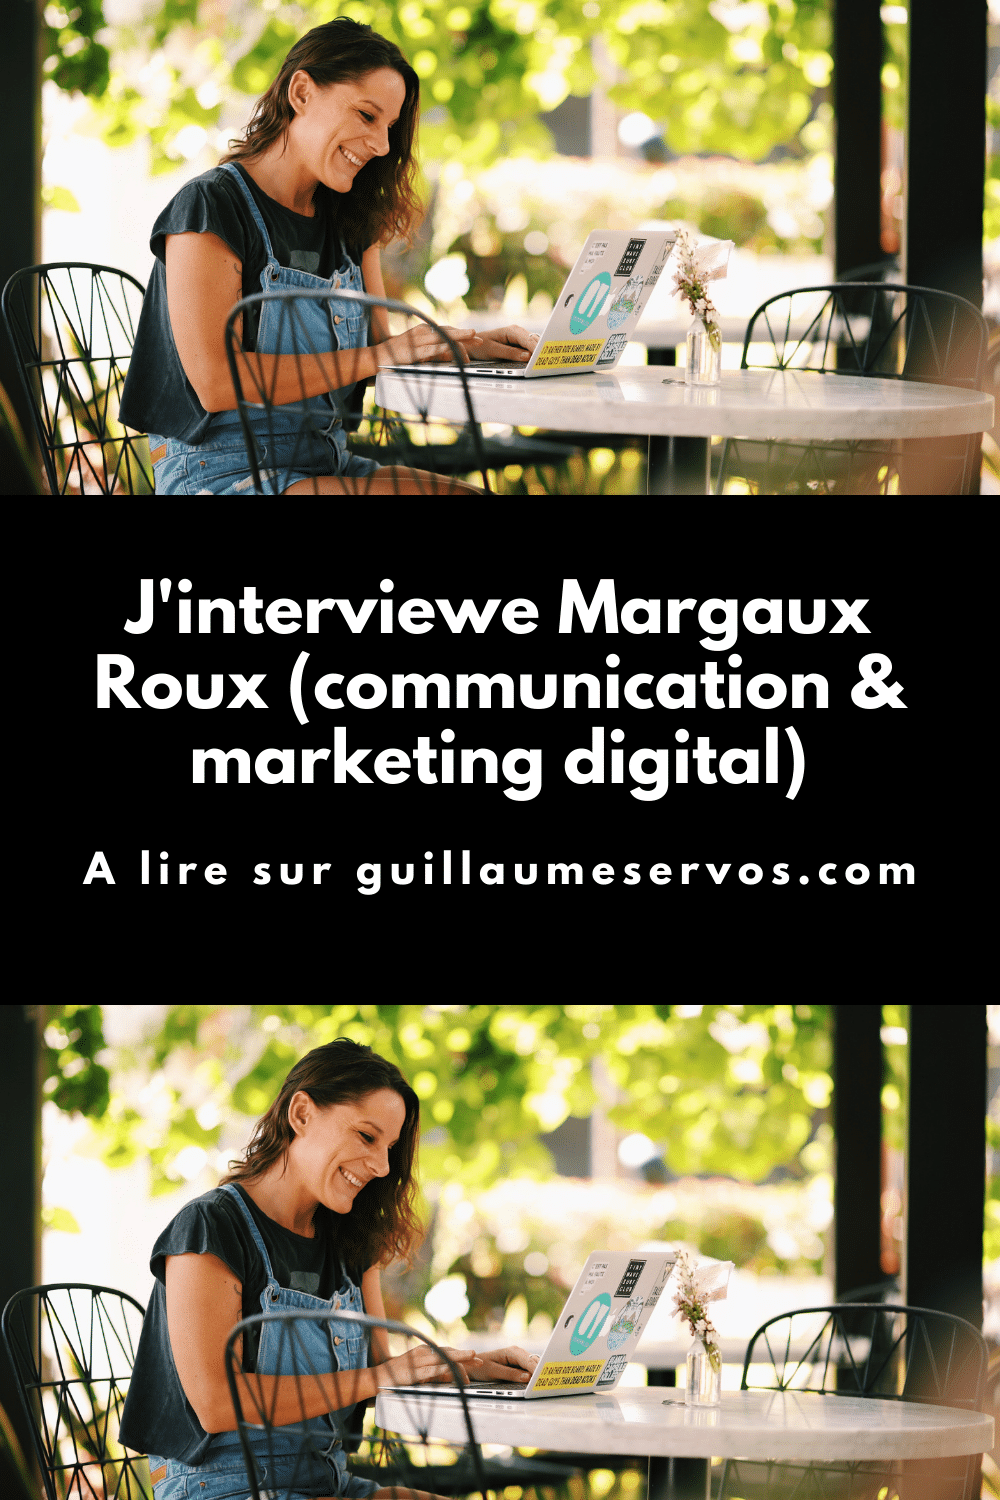 Interview avec Margaux Roux, communication & marketing digital